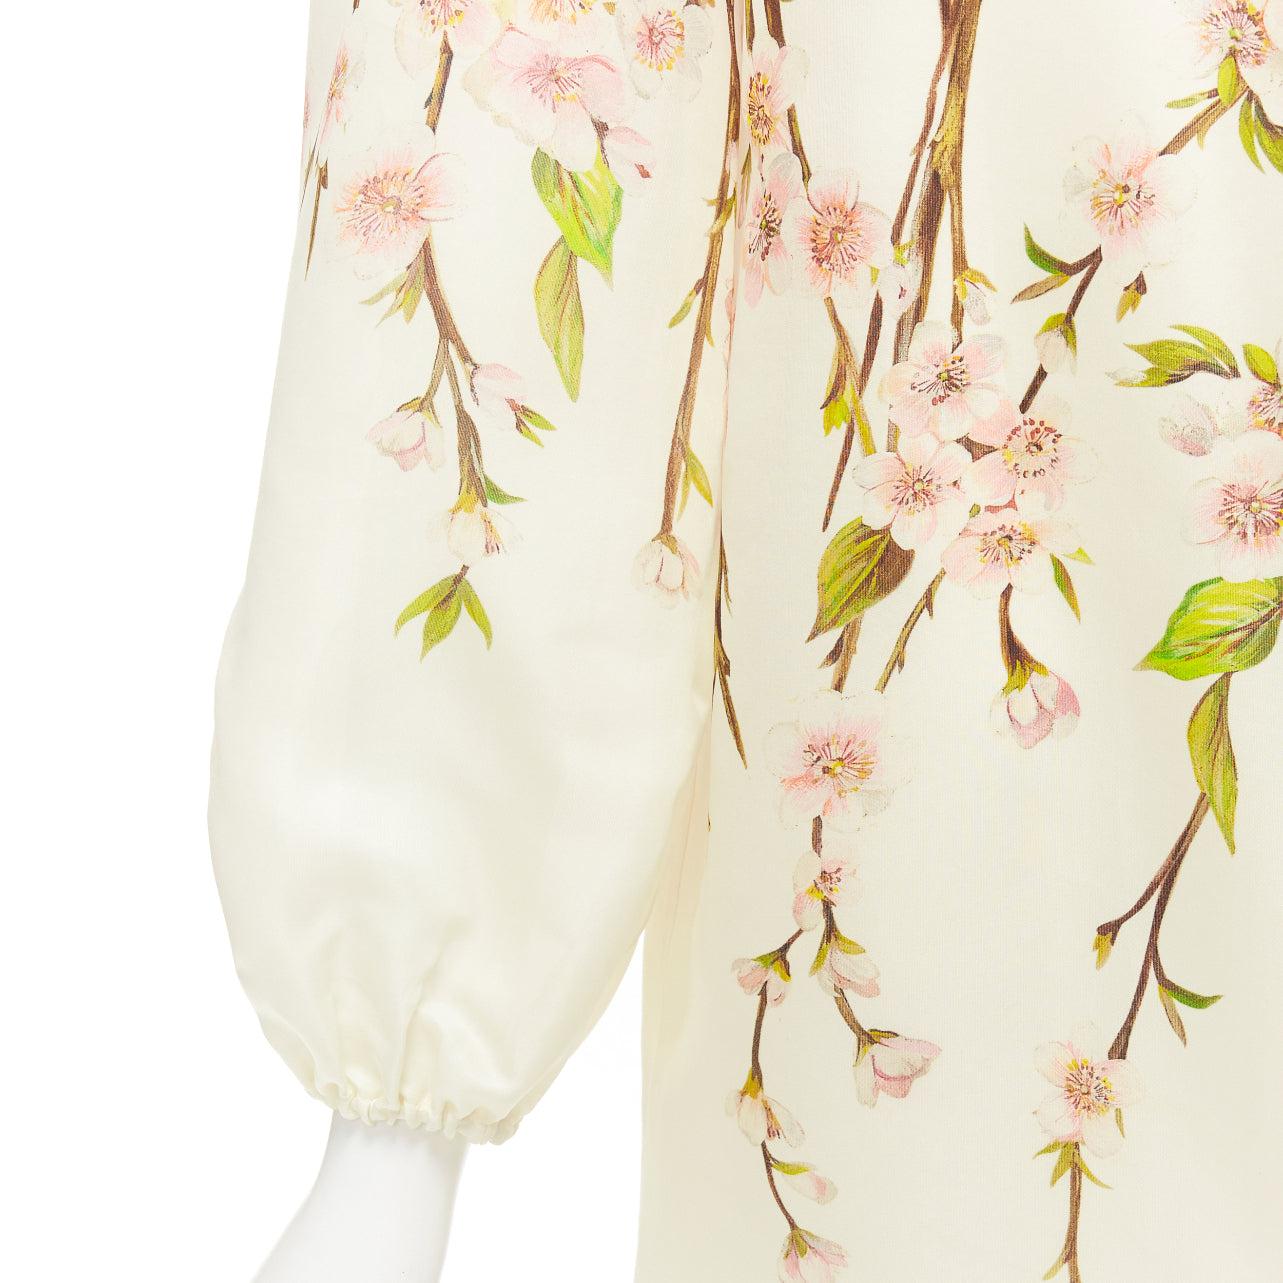 DOLCE GABBANA 100% silk cream cherry blossom print puff white dress IT40 S
Reference: TGAS/D00945
Brand: Dolce Gabbana
Designer: Domenico Dolce and Stefano Gabbana
Material: Silk
Color: Cream, Multicolour
Pattern: Floral
Closure: Zip
Lining: Cream